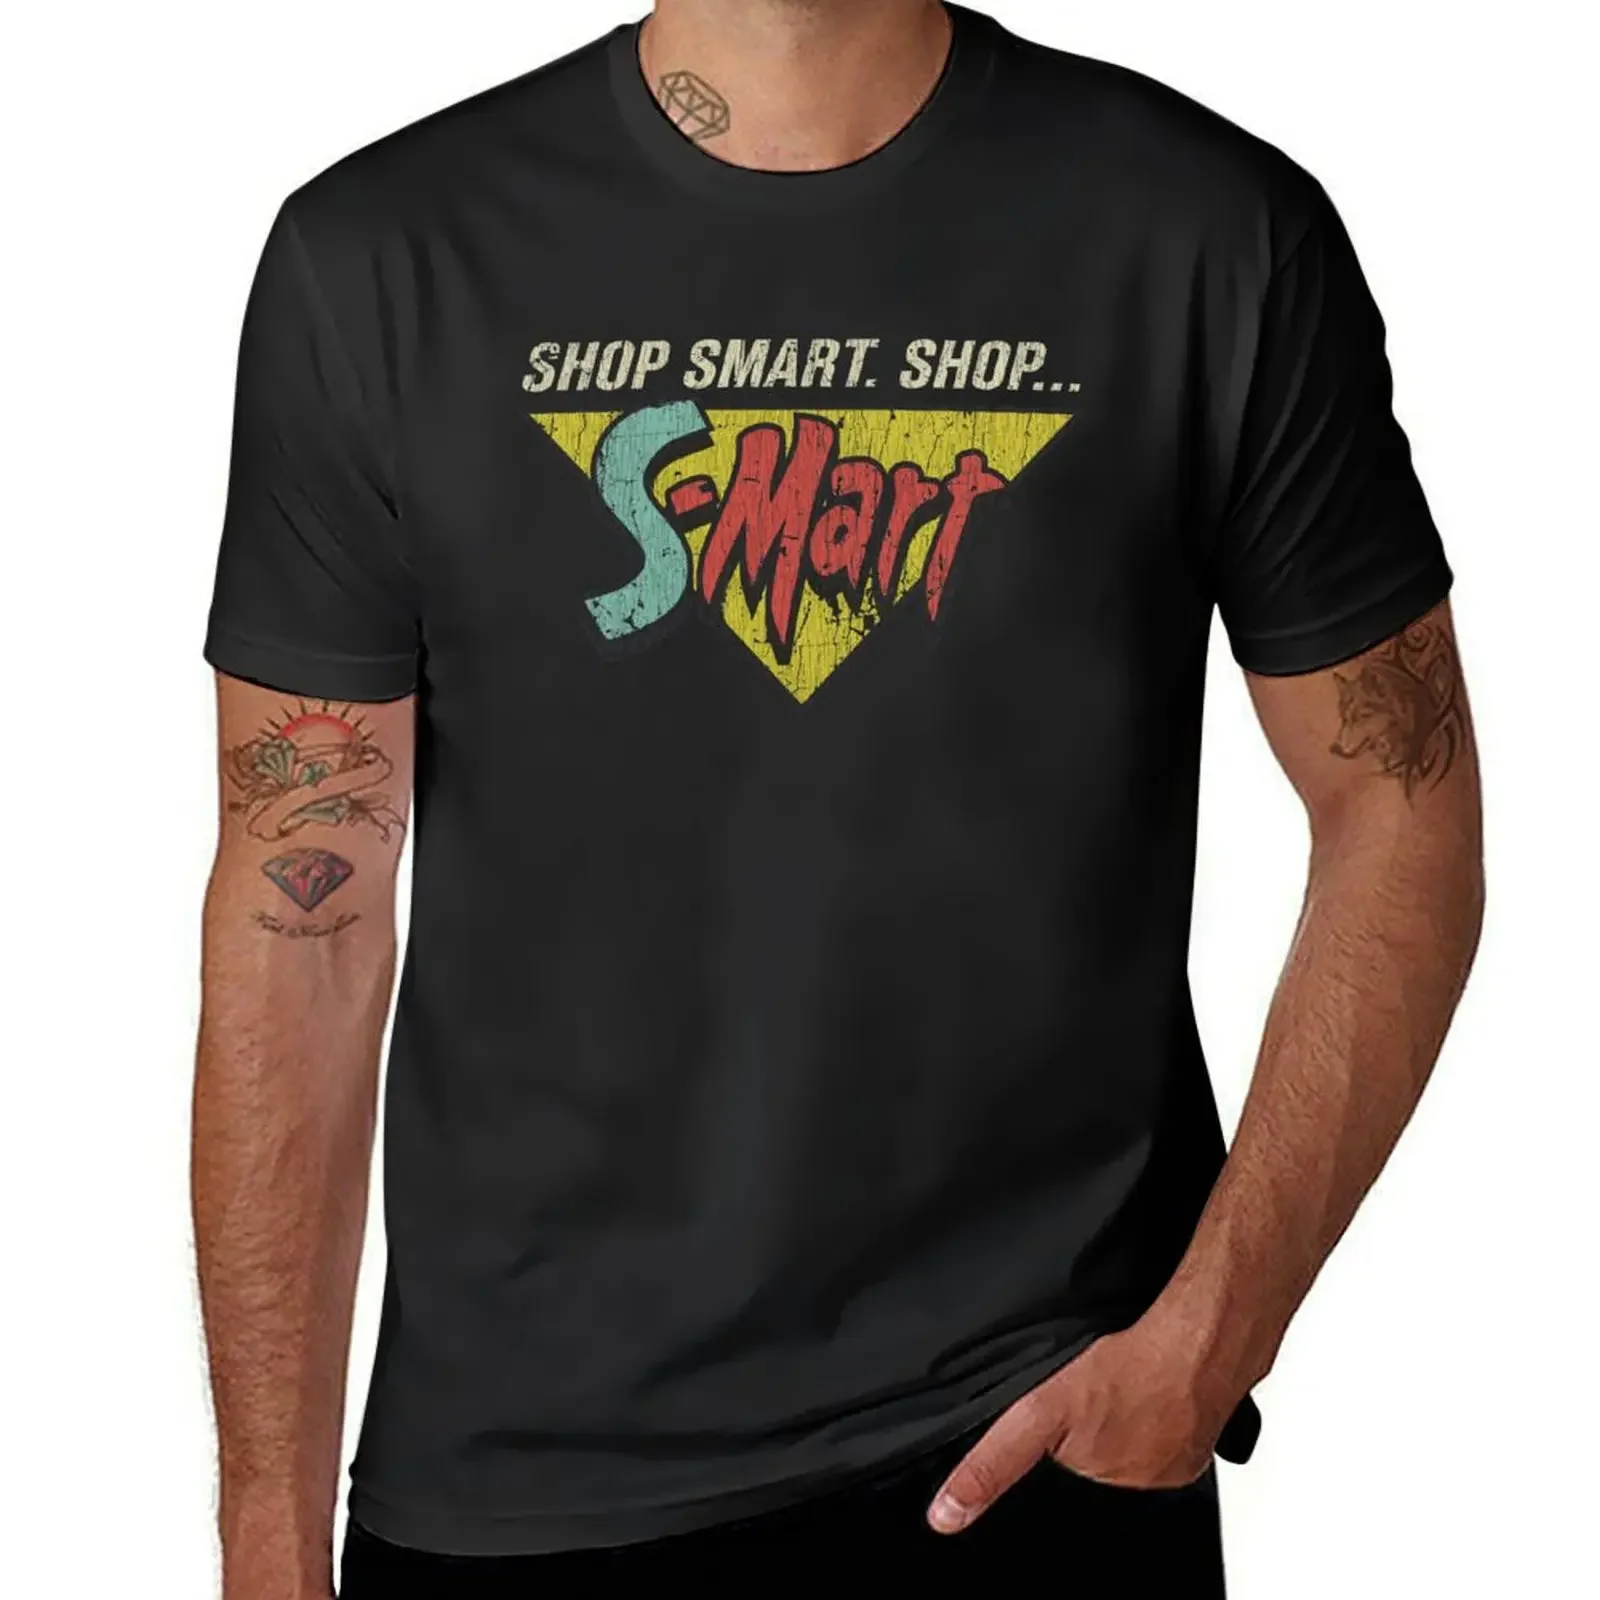 

Shop Smart. Shop S-Mart! T-Shirt quick-drying tees customs design your own T-shirts for men cotton